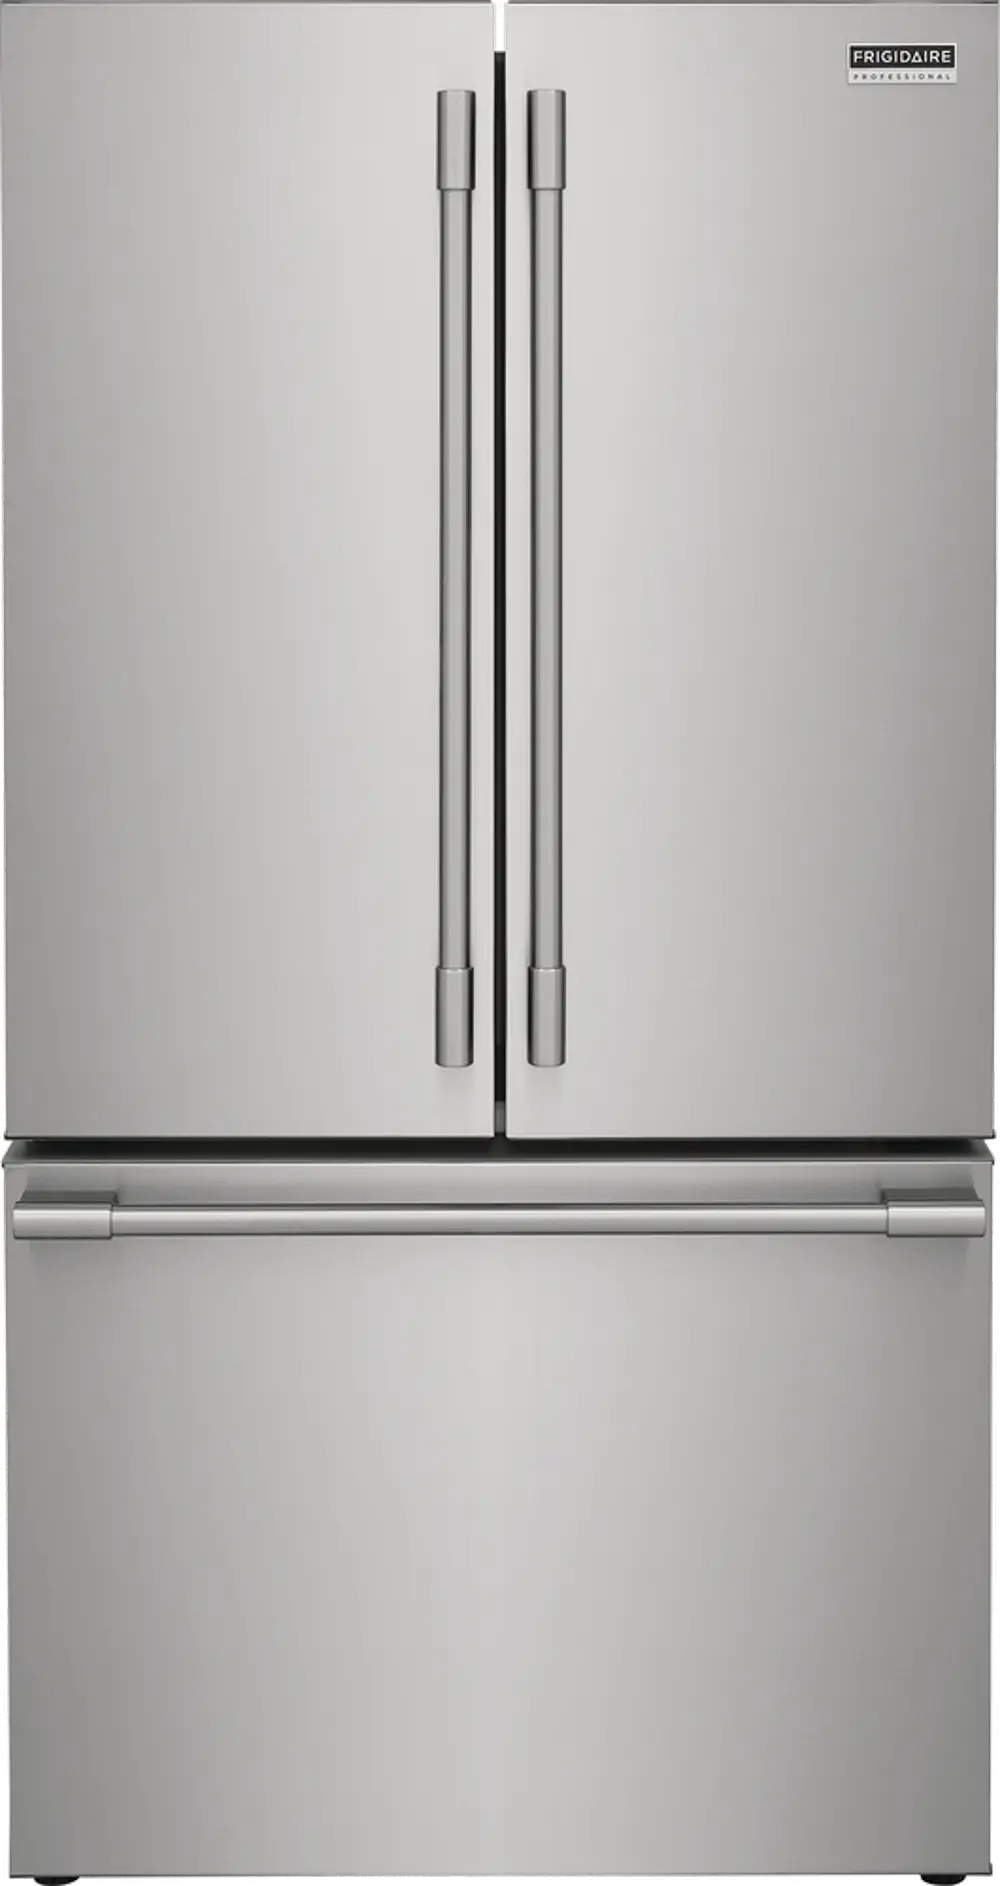 PRFG2383AF Frigidaire Professional 23.3 cu ft French Door Refrigerator - Counter Depth Stainless Steel-1